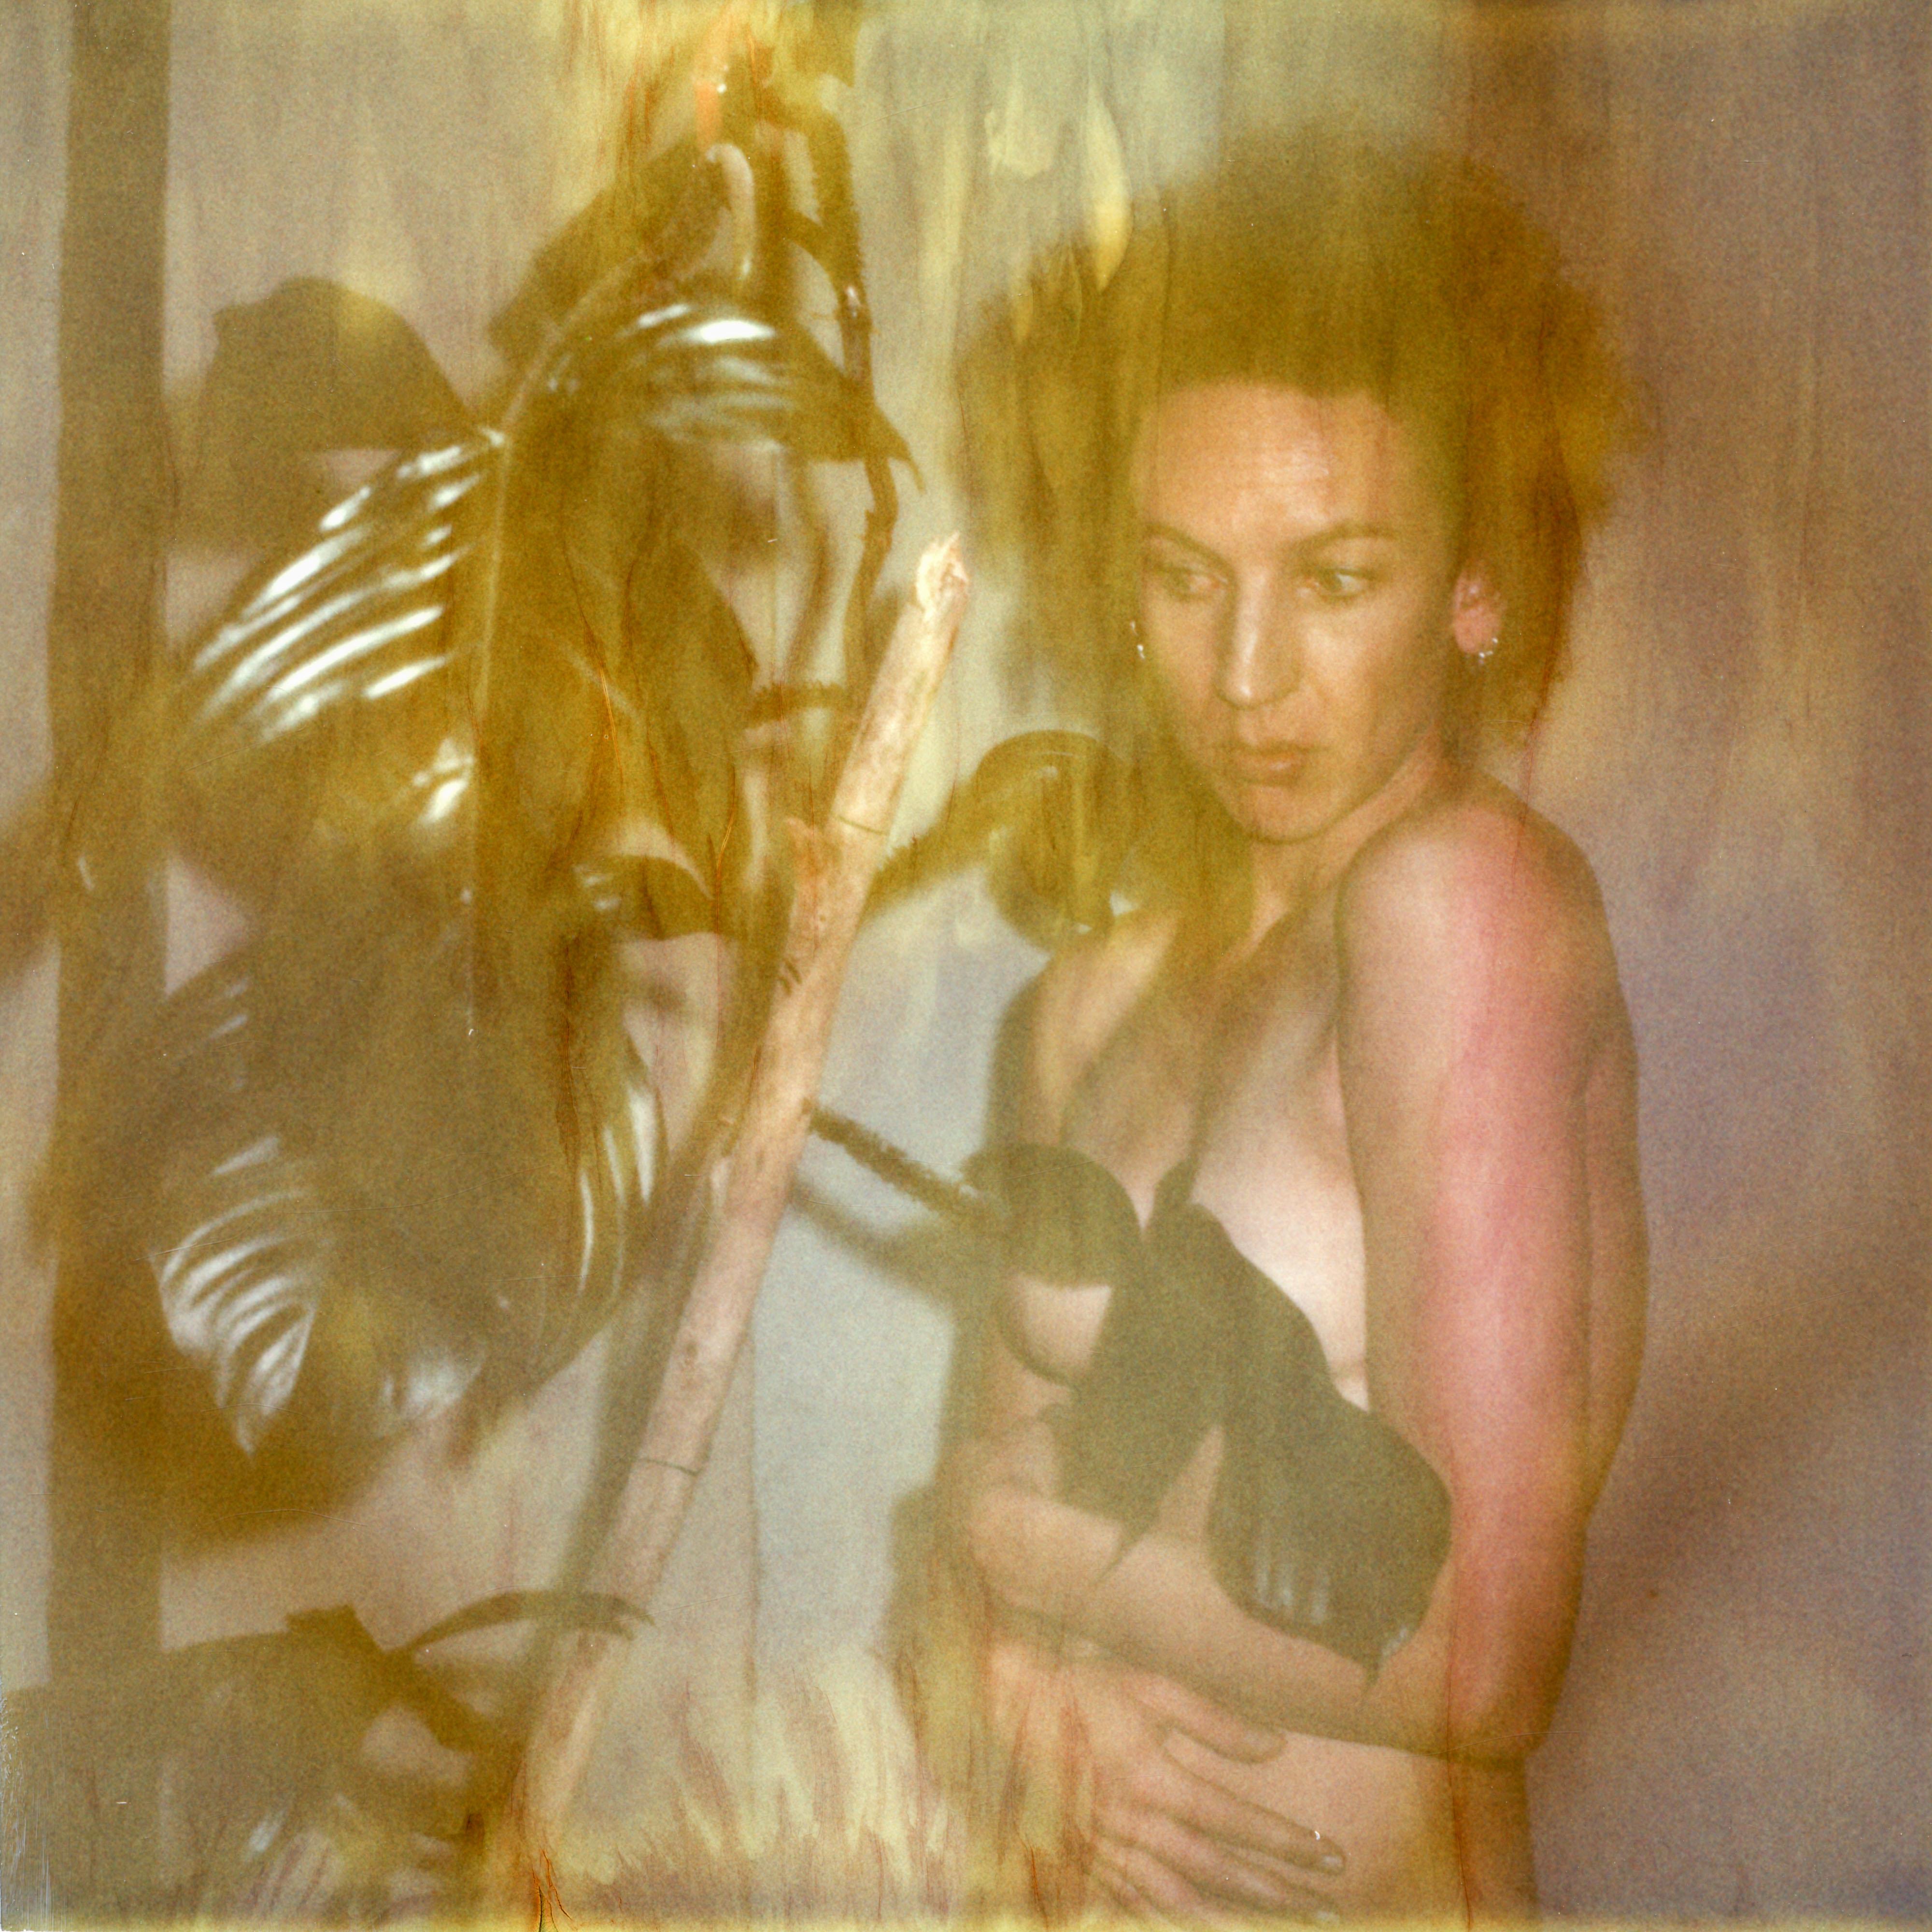 Kirsten Thys van den Audenaerde Color Photograph - Shine - Contemporary, Nude, Women, Polaroid, 21st Century